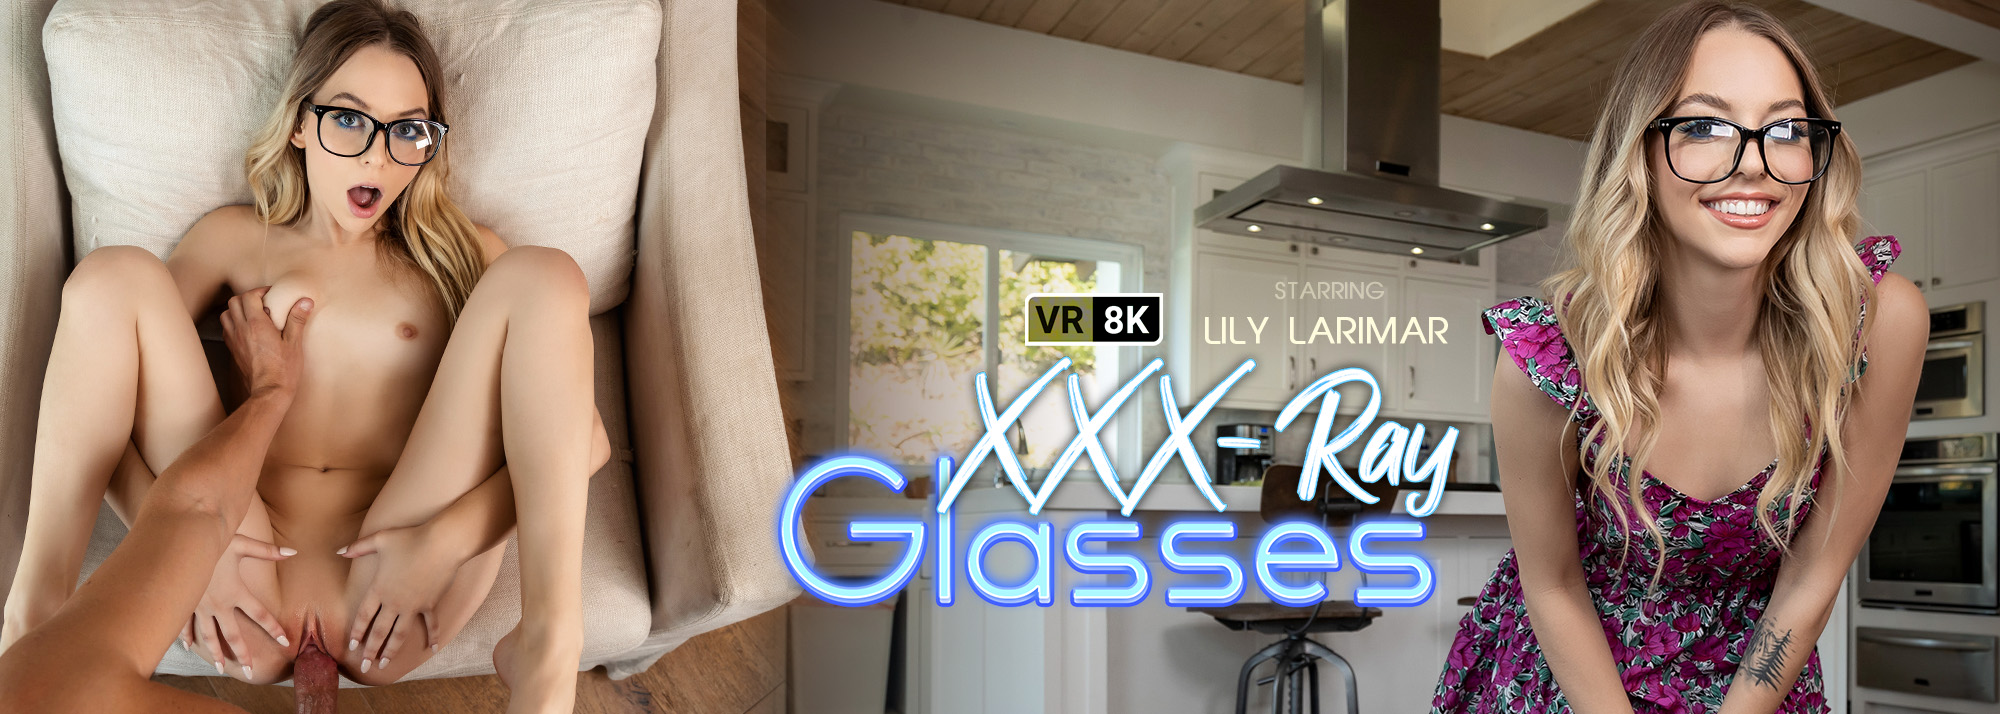 XXX-Ray Glasses with Lily Larimar  Slideshow